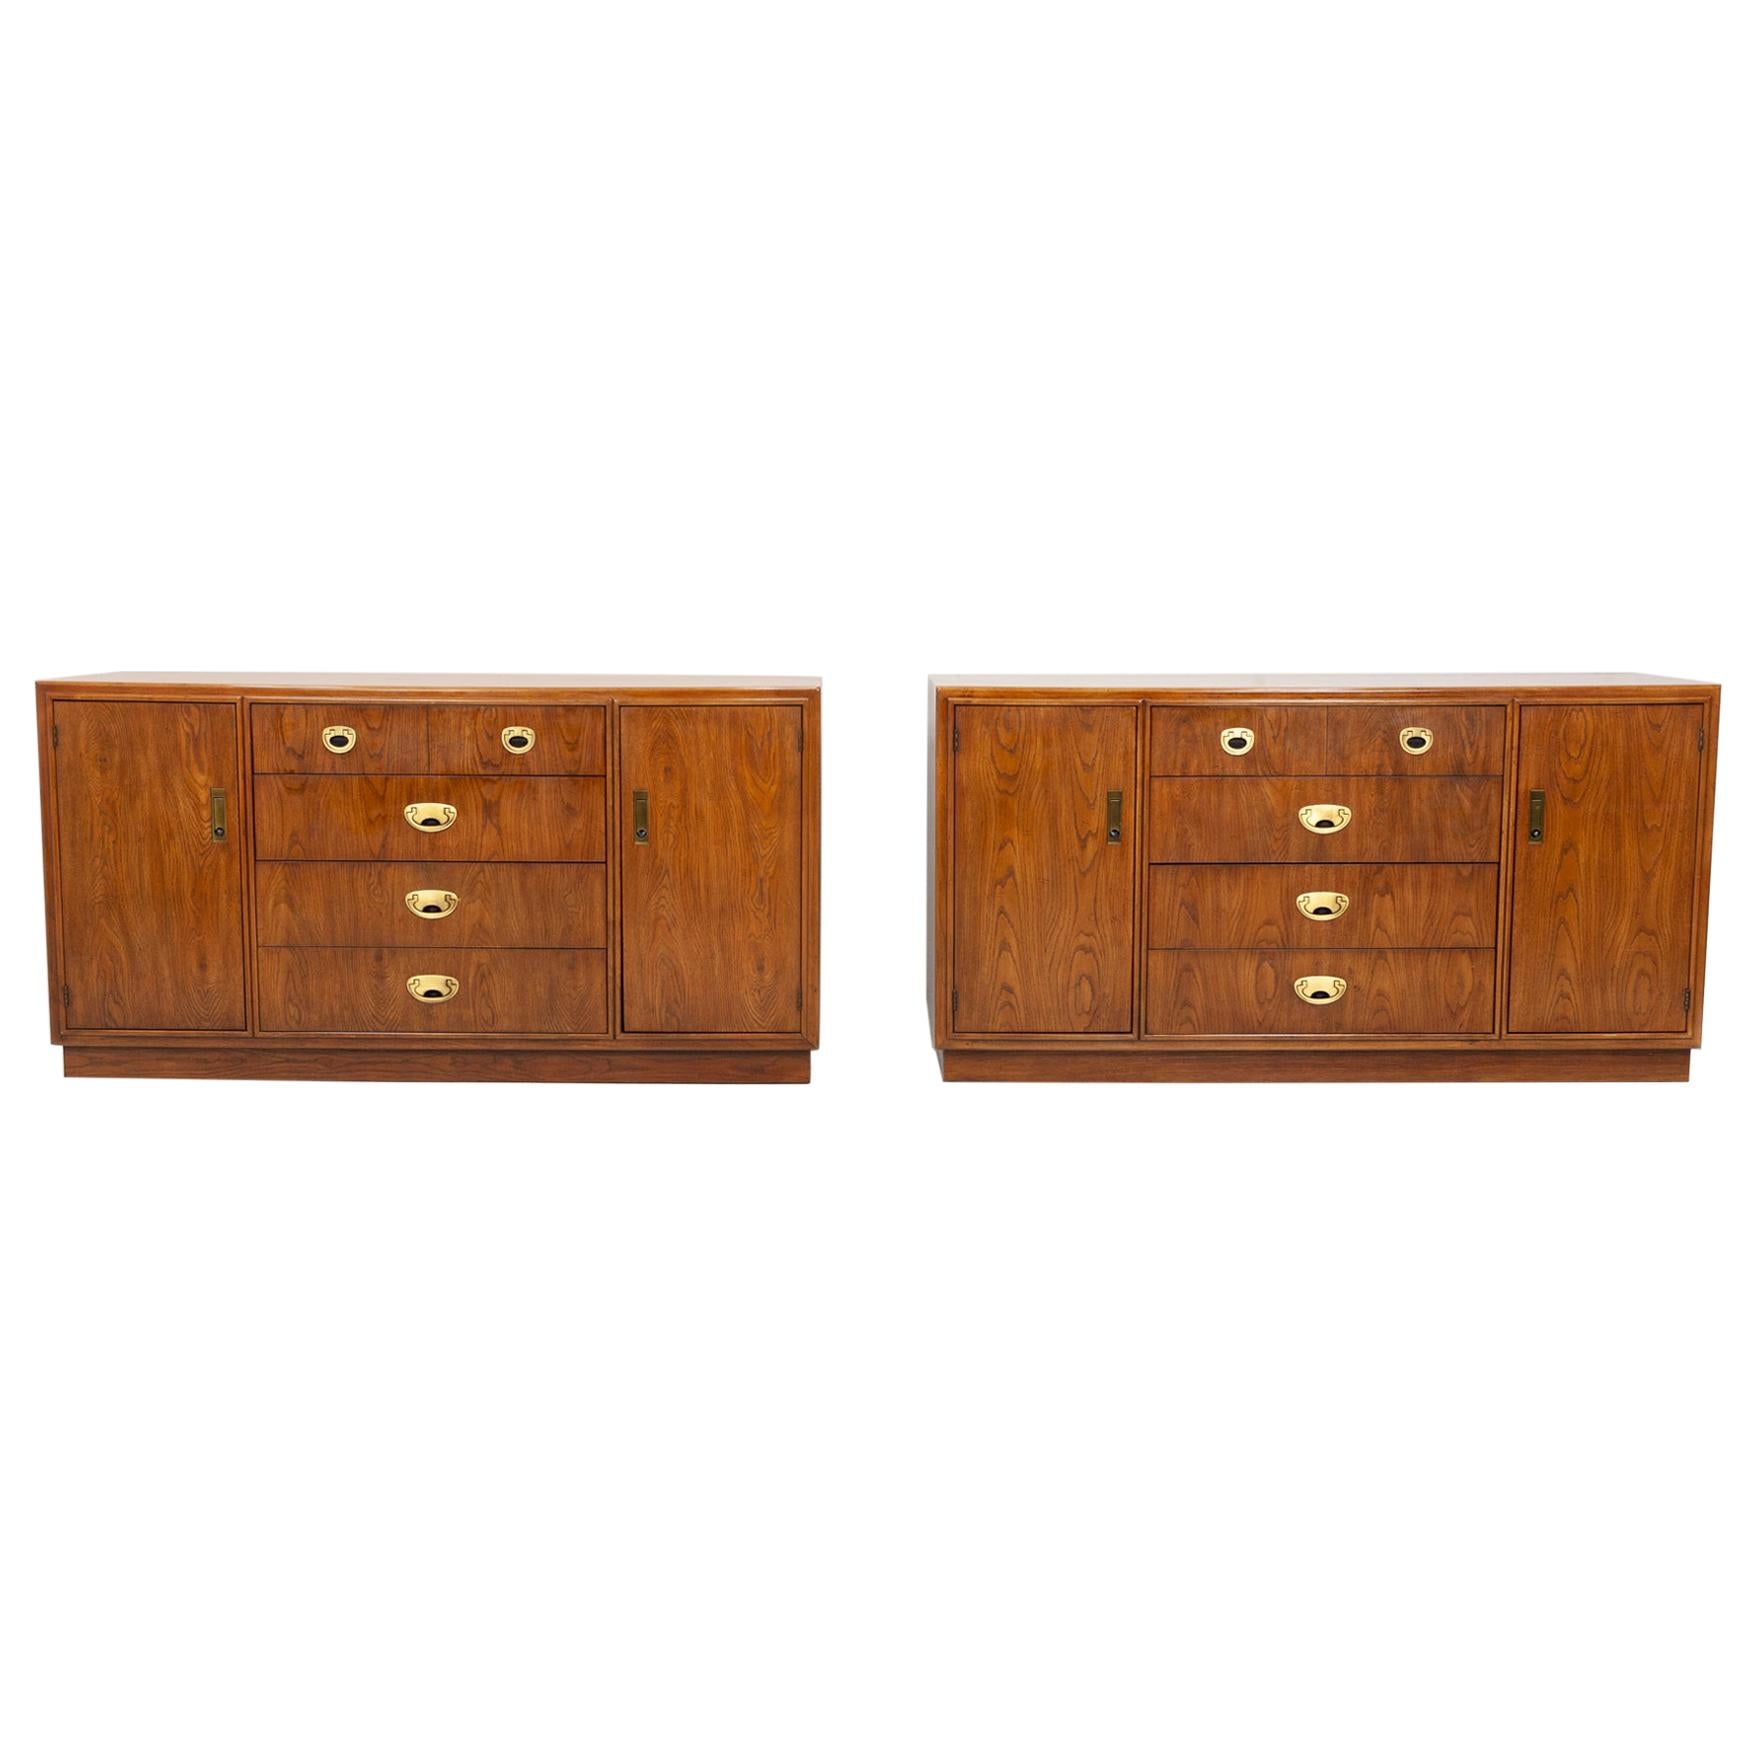 2 Dressers by Drexel Heritage